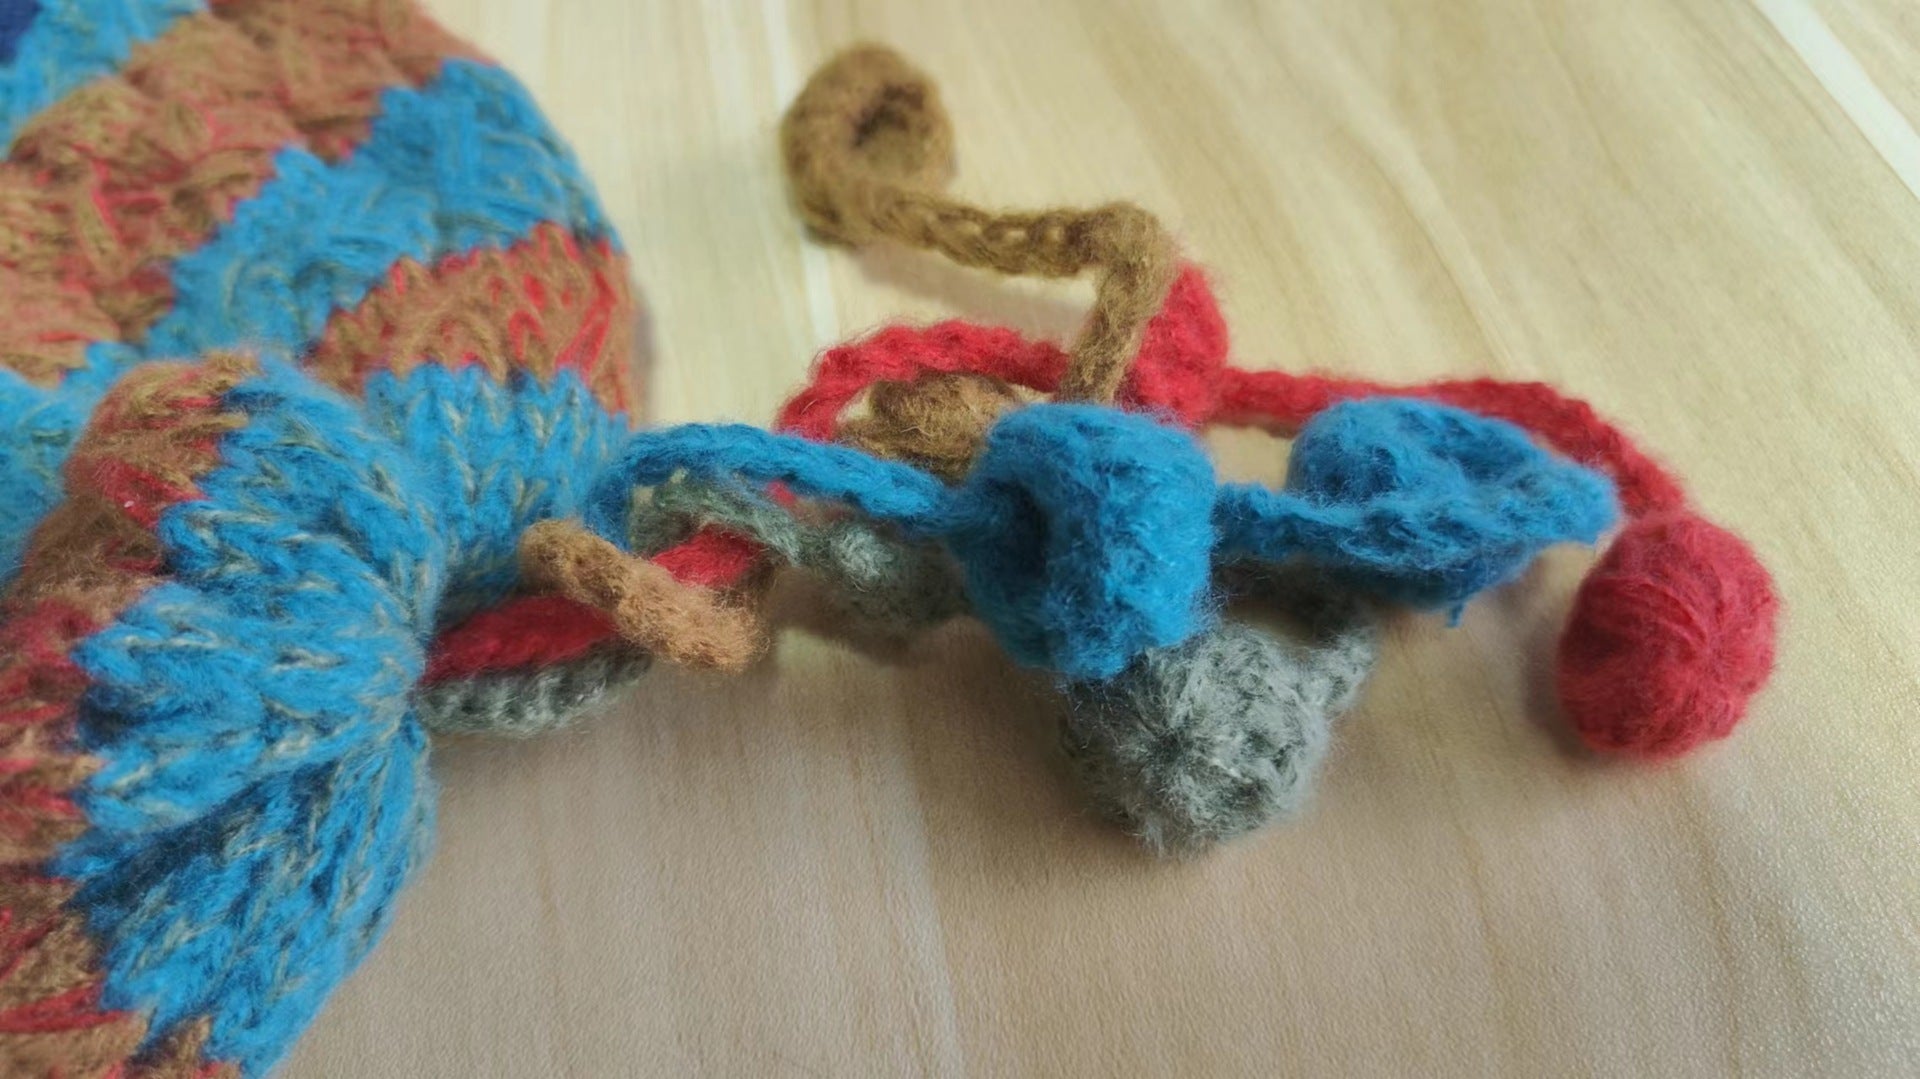 Season Handmade Crochet Color Ball Strap Wool Hat